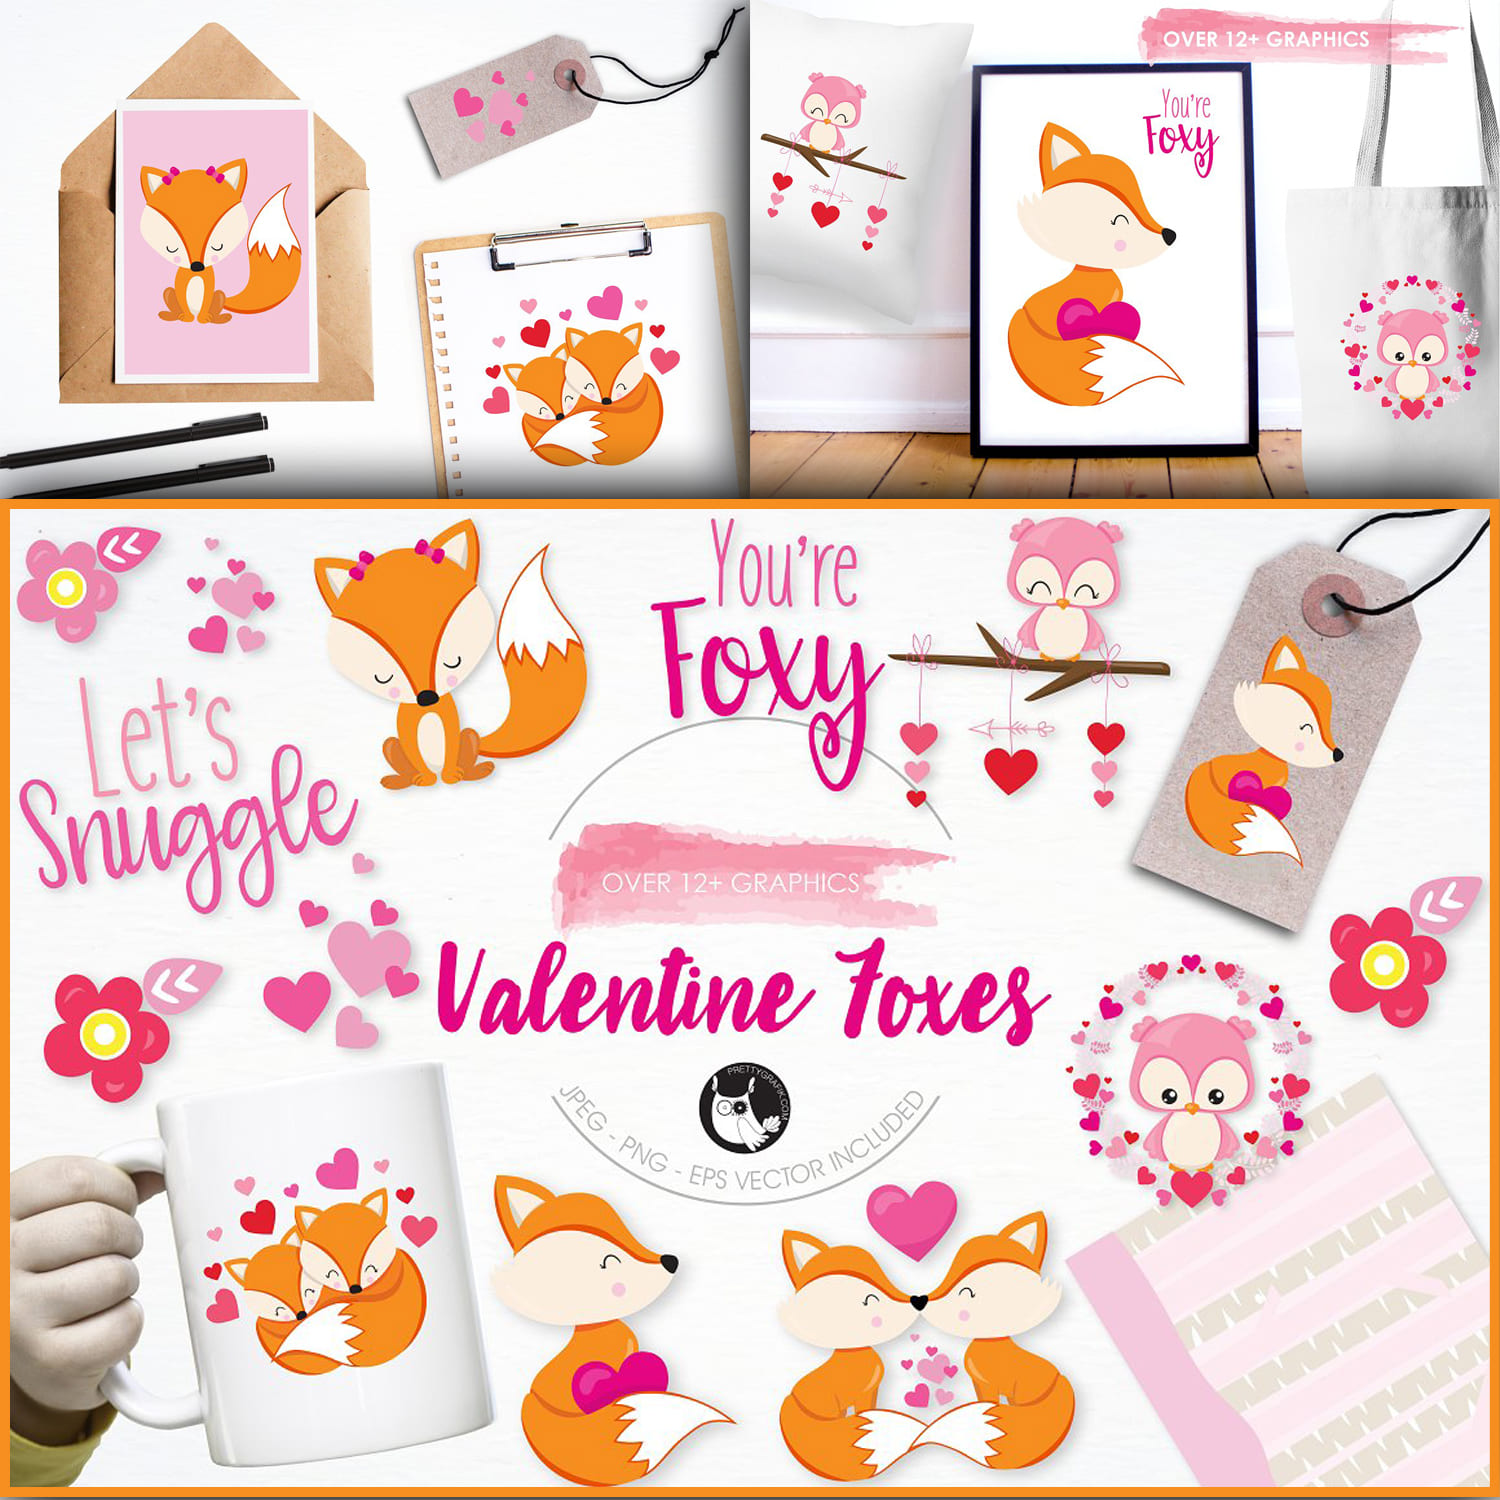 Valentine foxes illustration pack by Prettygrafik Design.